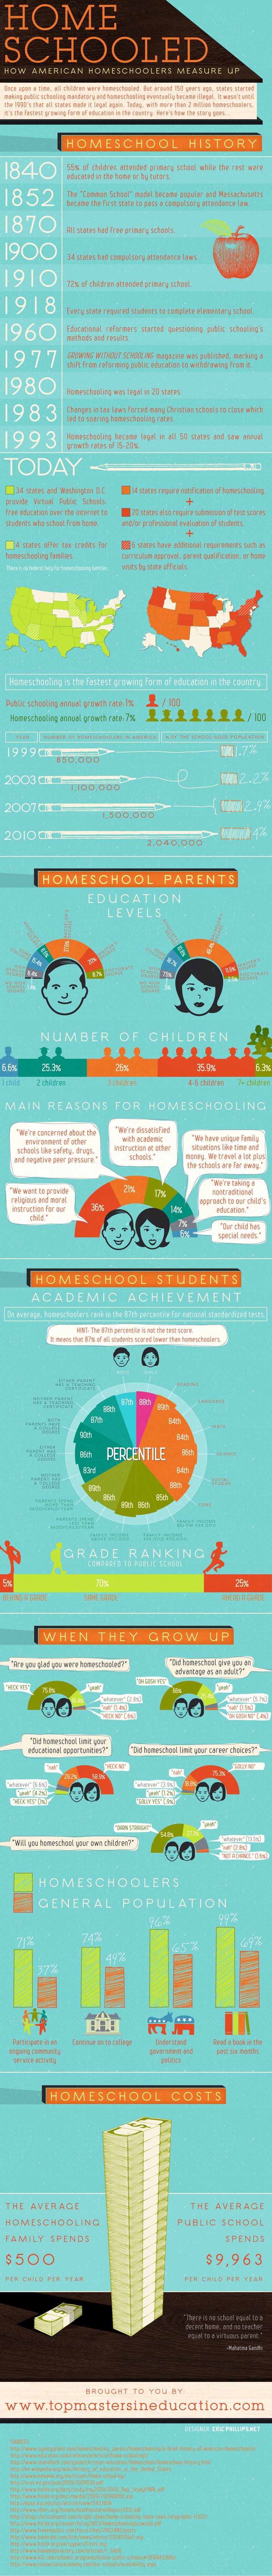 compare and contrast essay homeschool vs public school